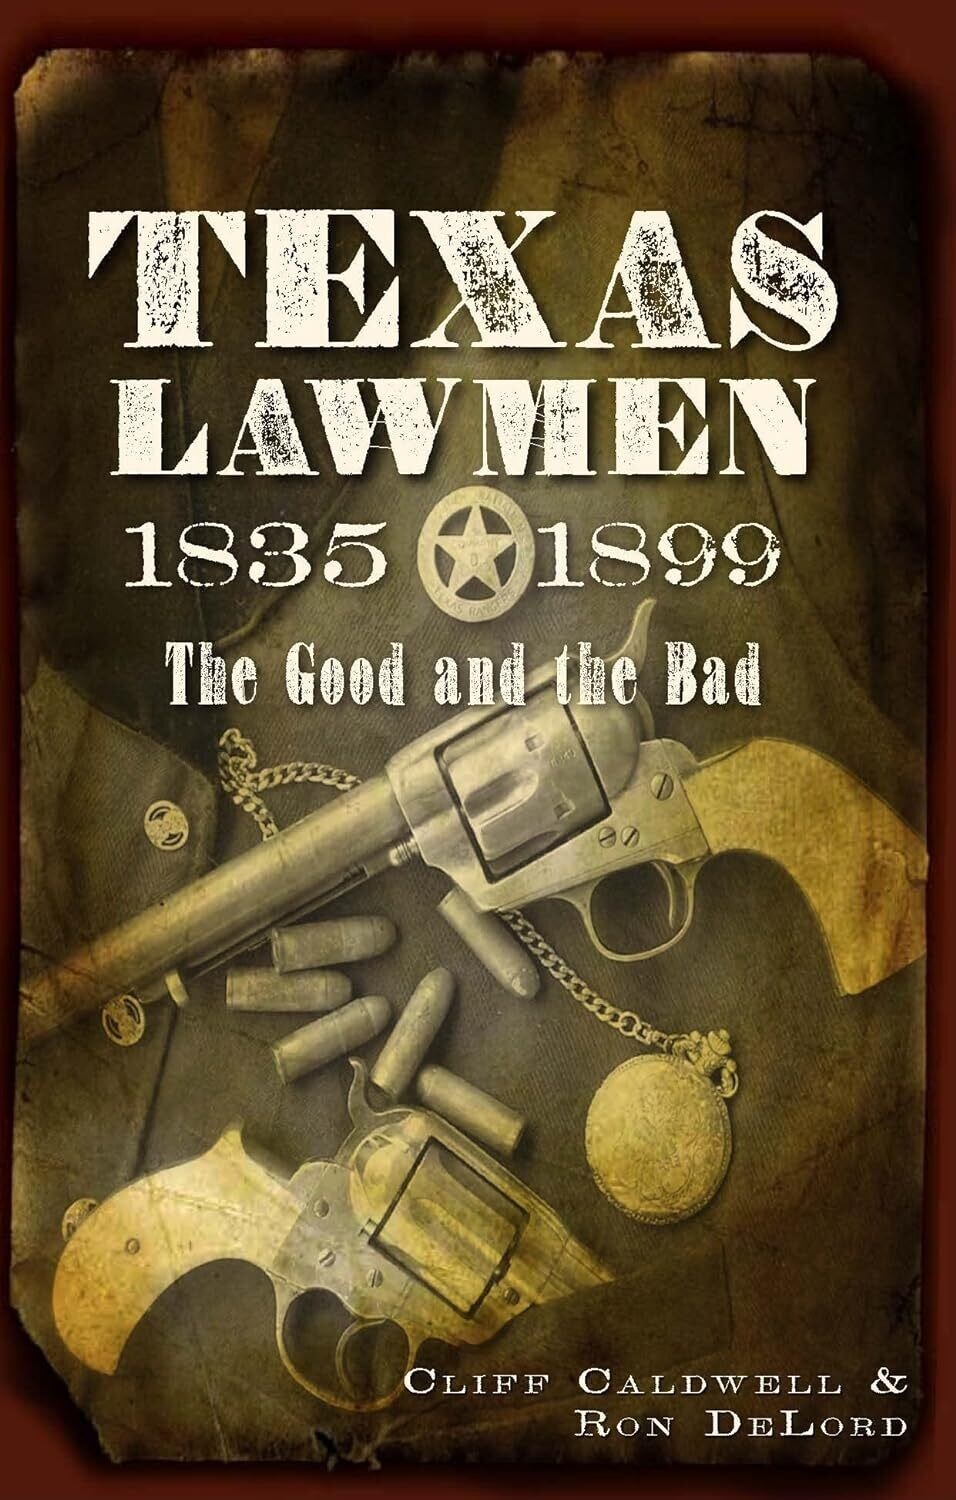 Texas Lawmen 1835-1899